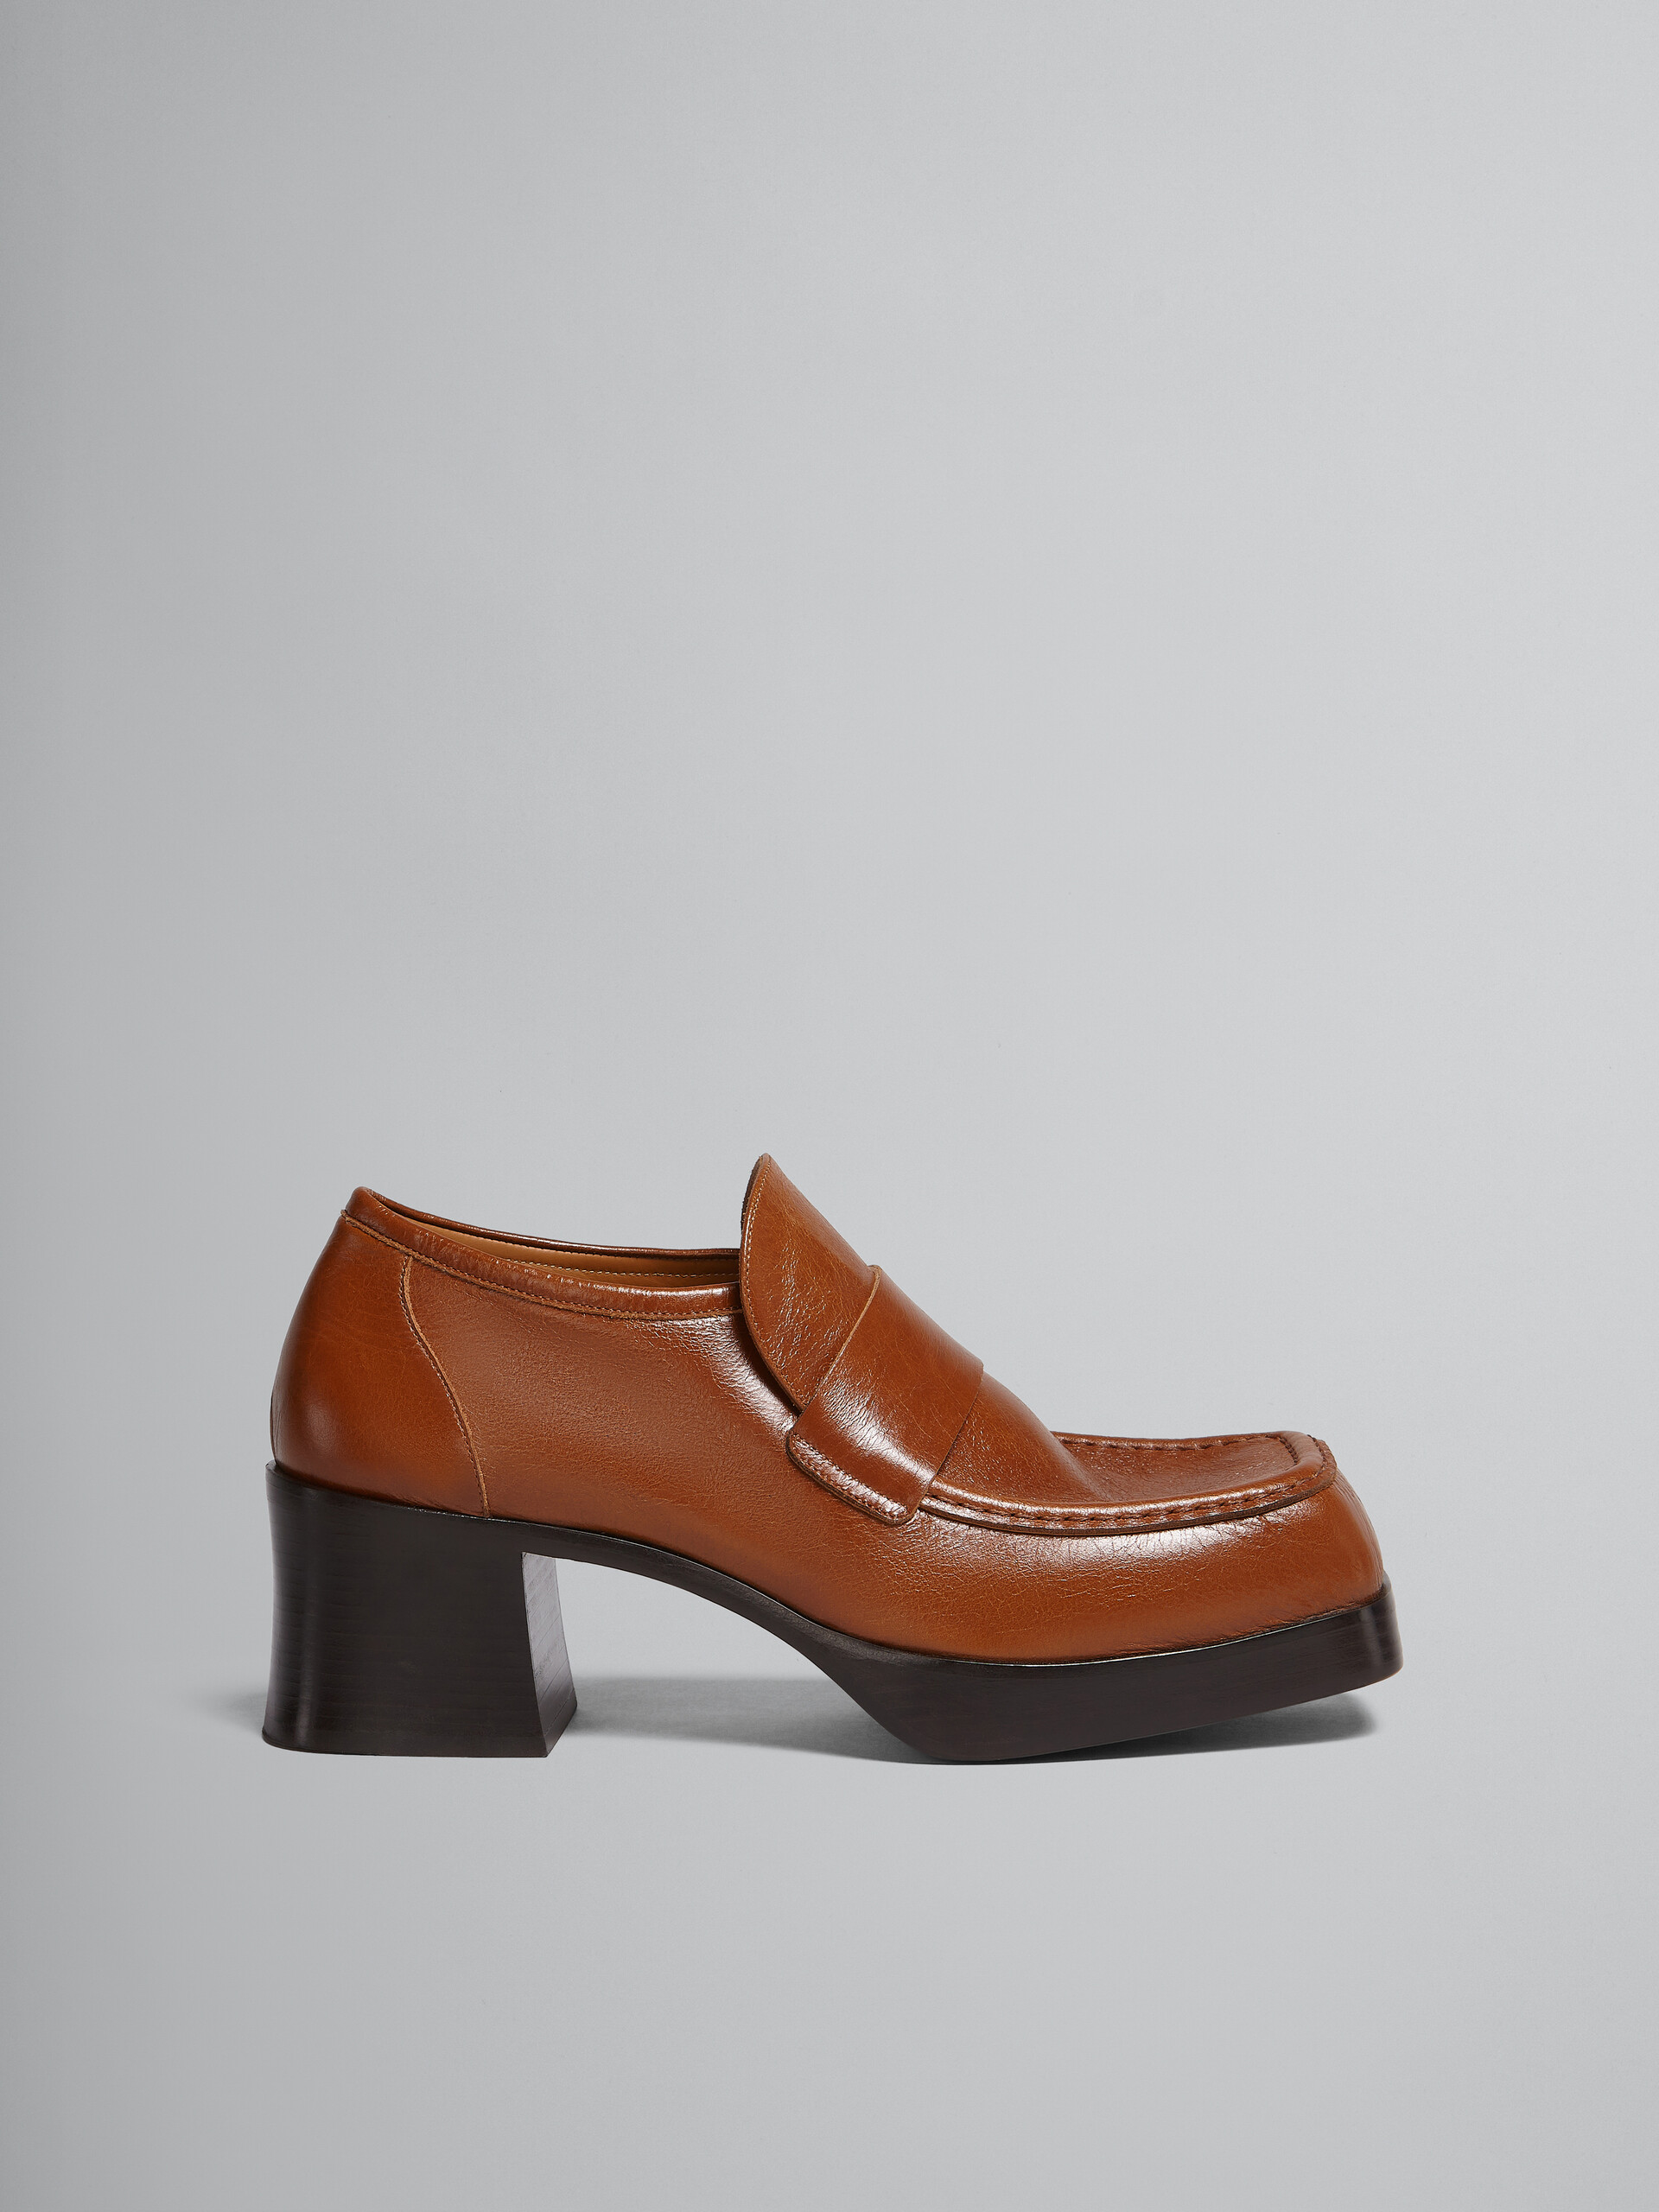 Brown leather heeled loafer - Pumps - Image 1